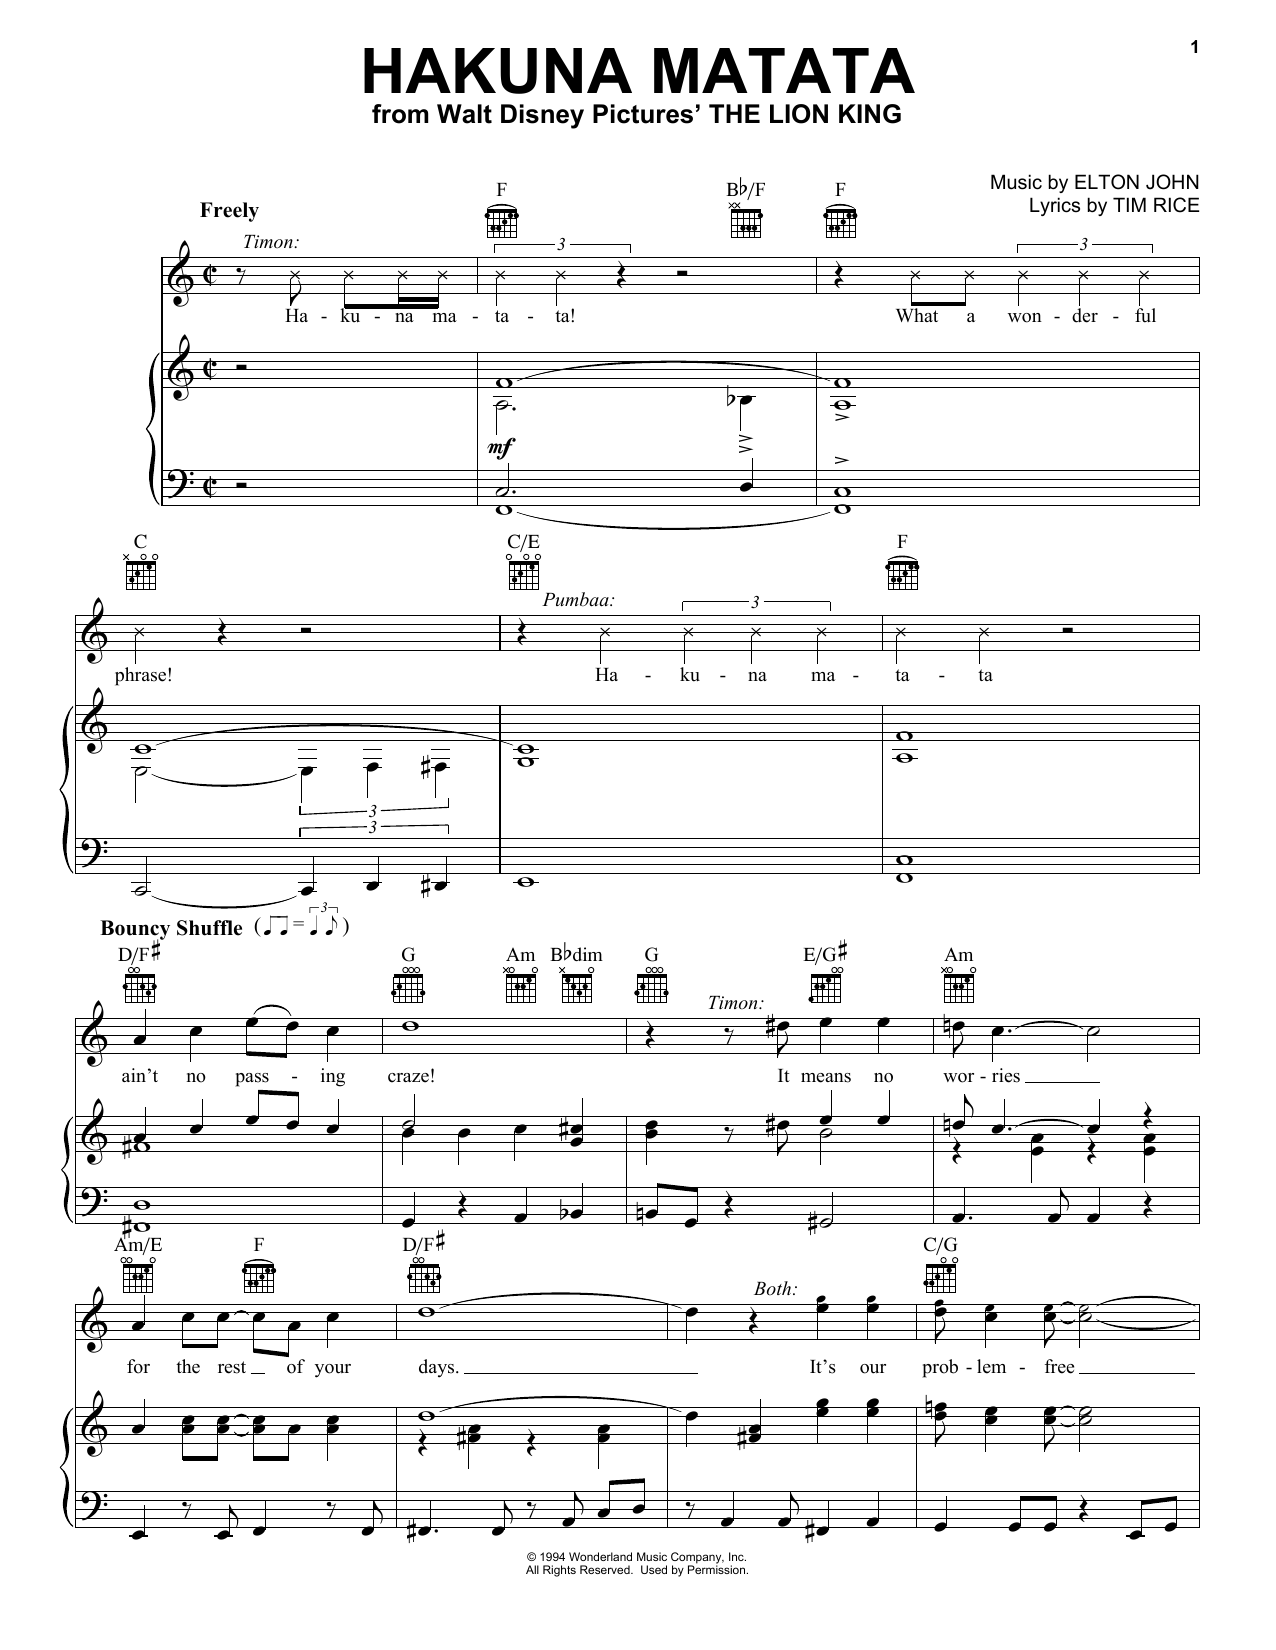 Download Elton John Hakuna Matata Sheet Music and learn how to play Piano PDF digital score in minutes